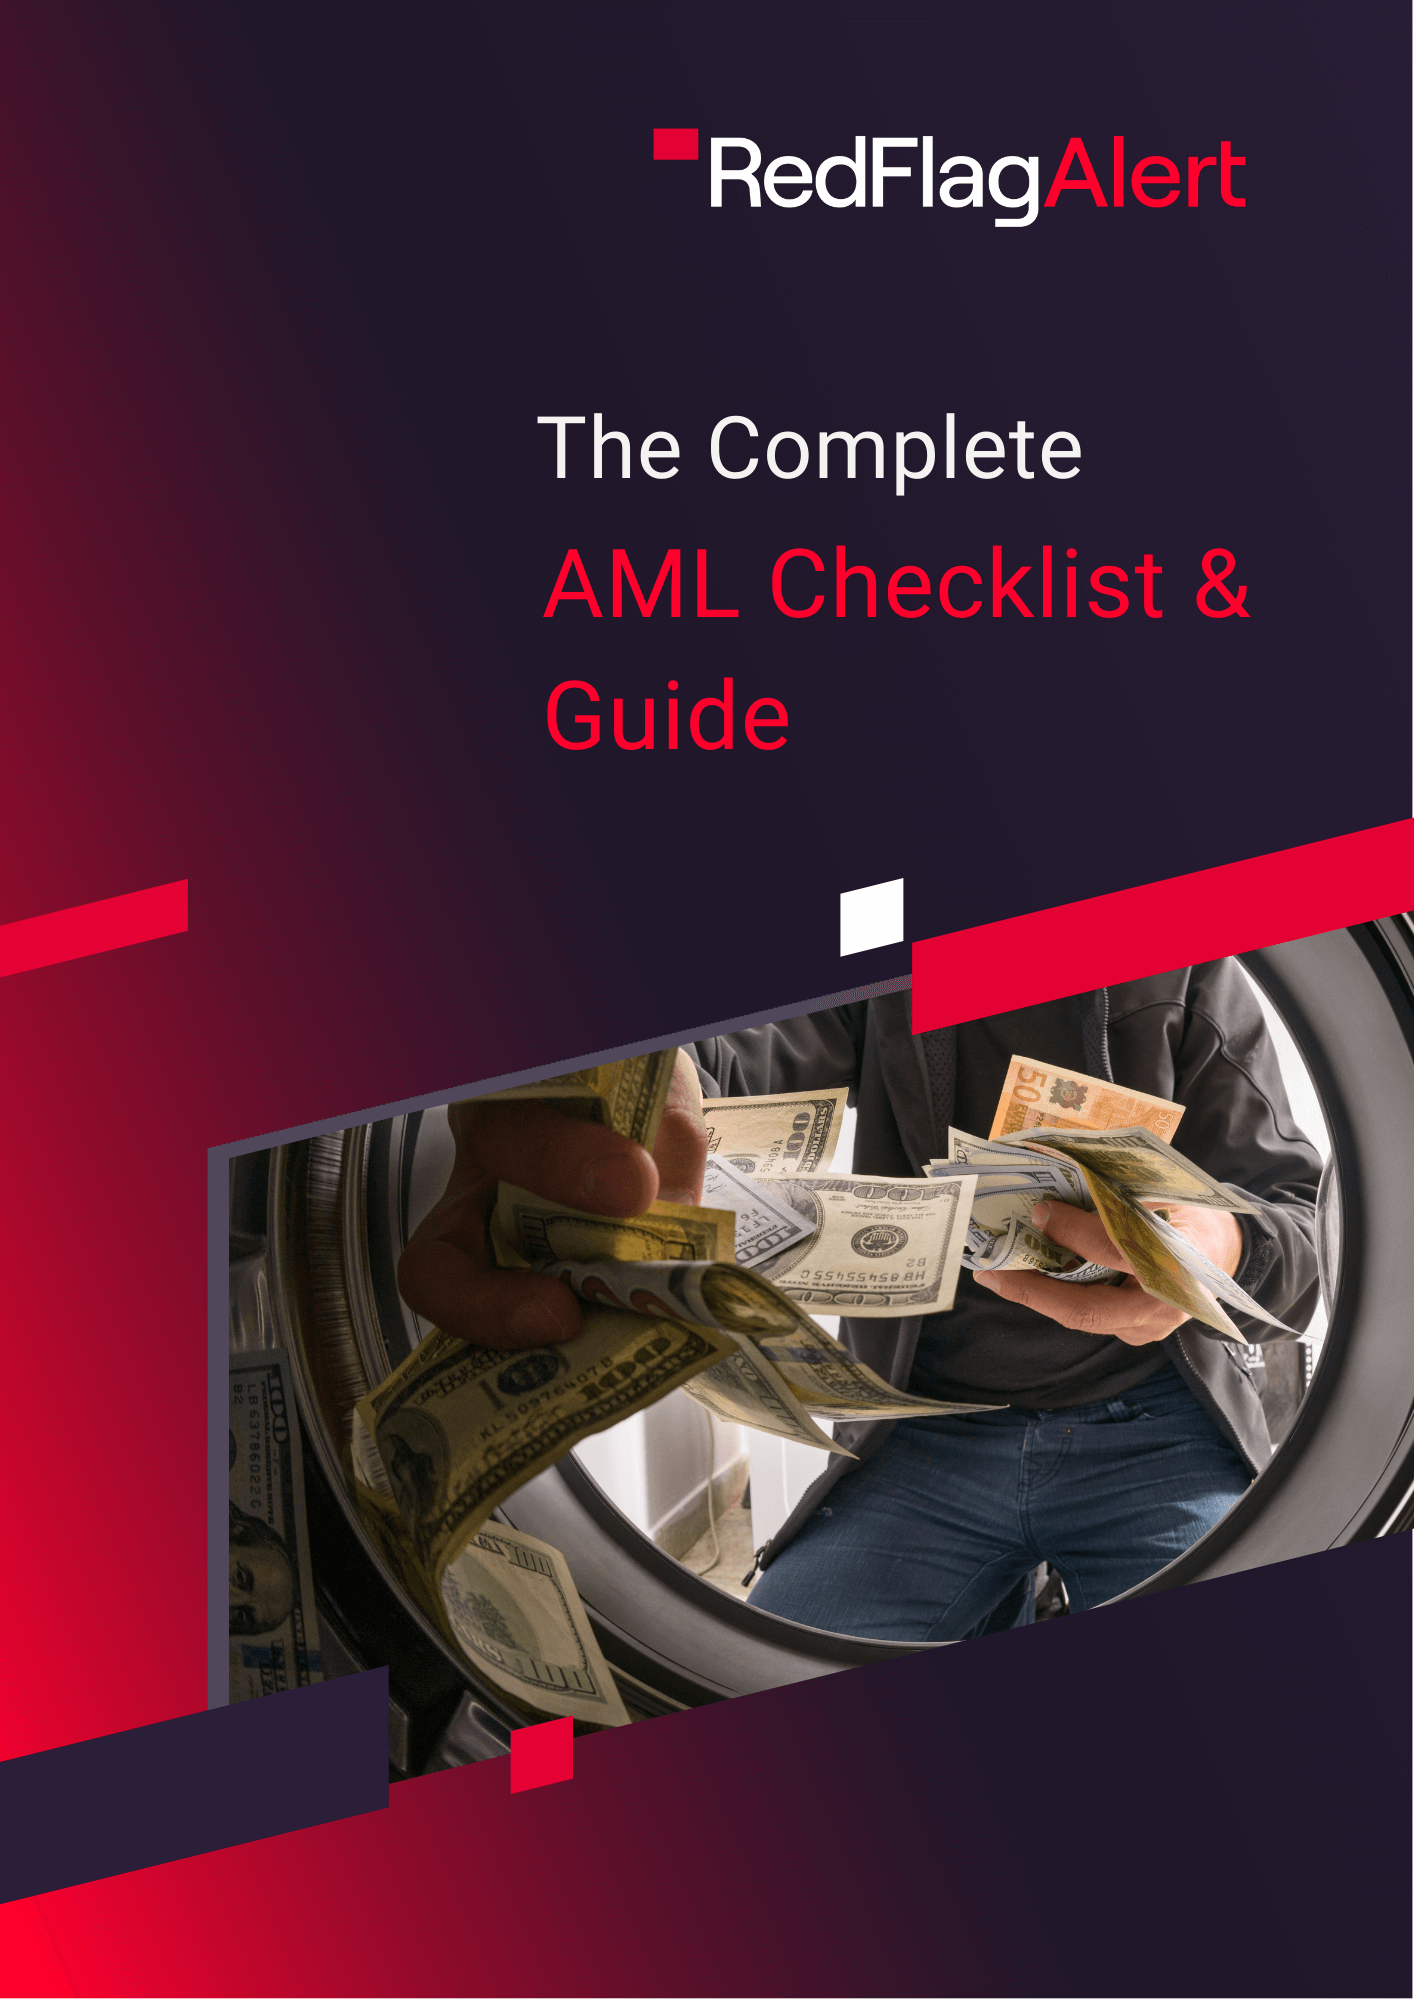 AML Checklist